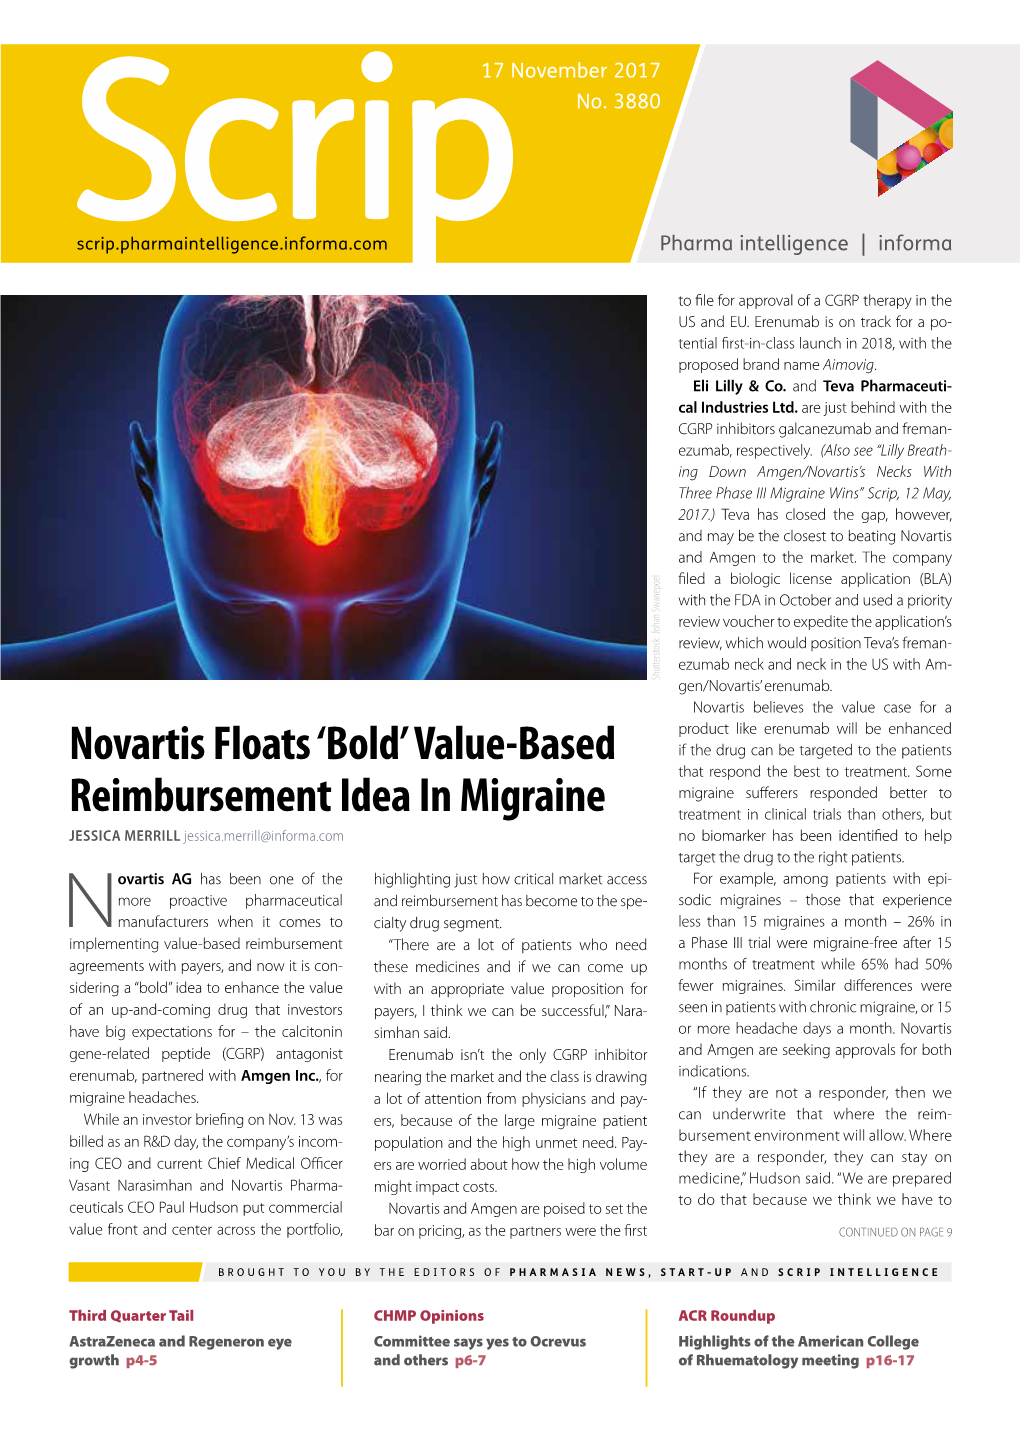 Novartis Floats 'Bold' Value-Based Reimbursement Idea in Migraine